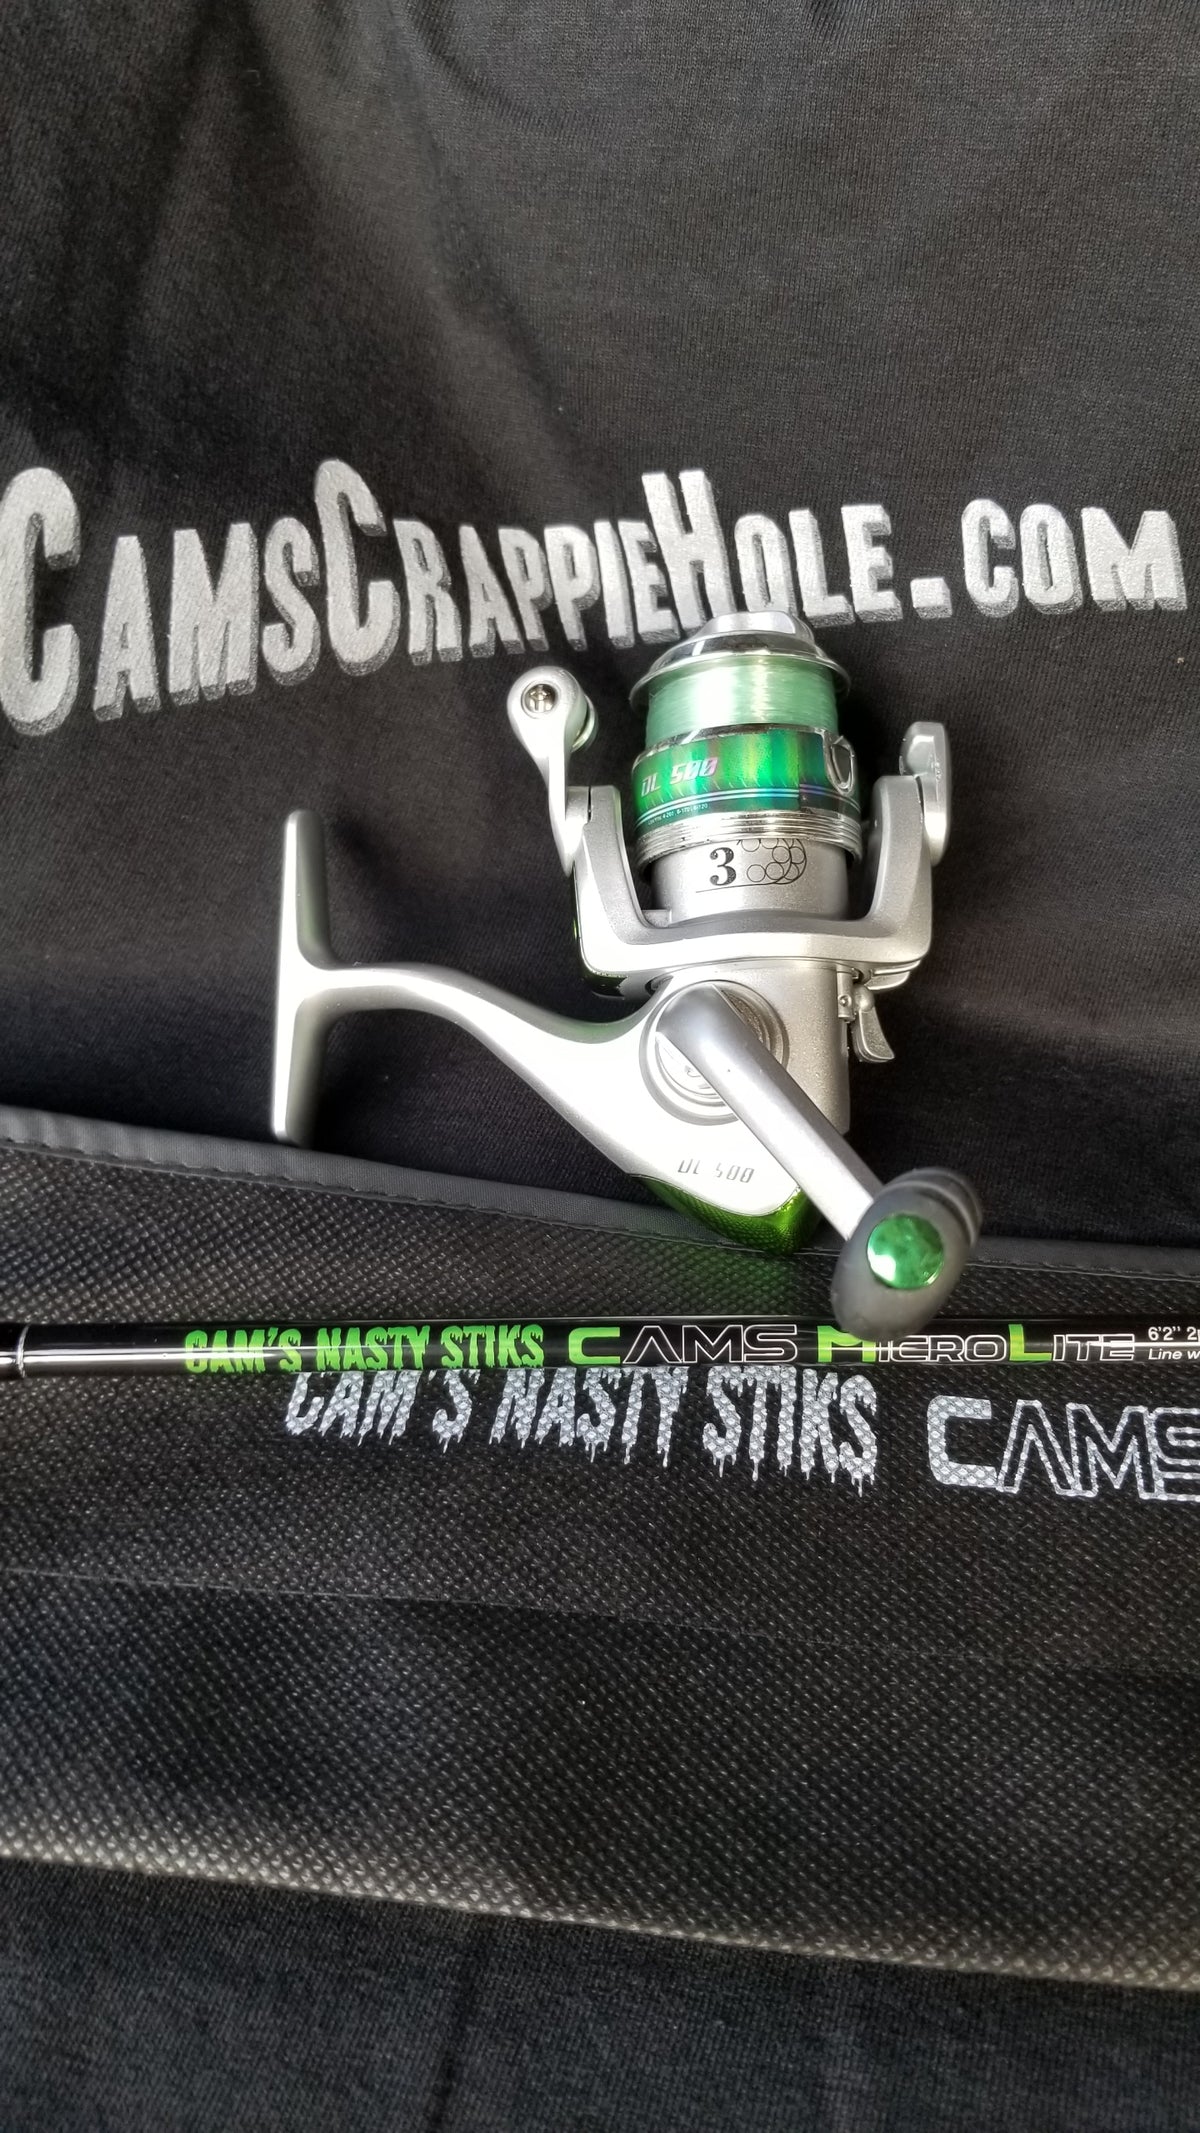 Cam's "Emerald" Nasty Stik MicroLite Rod and Reel Combo